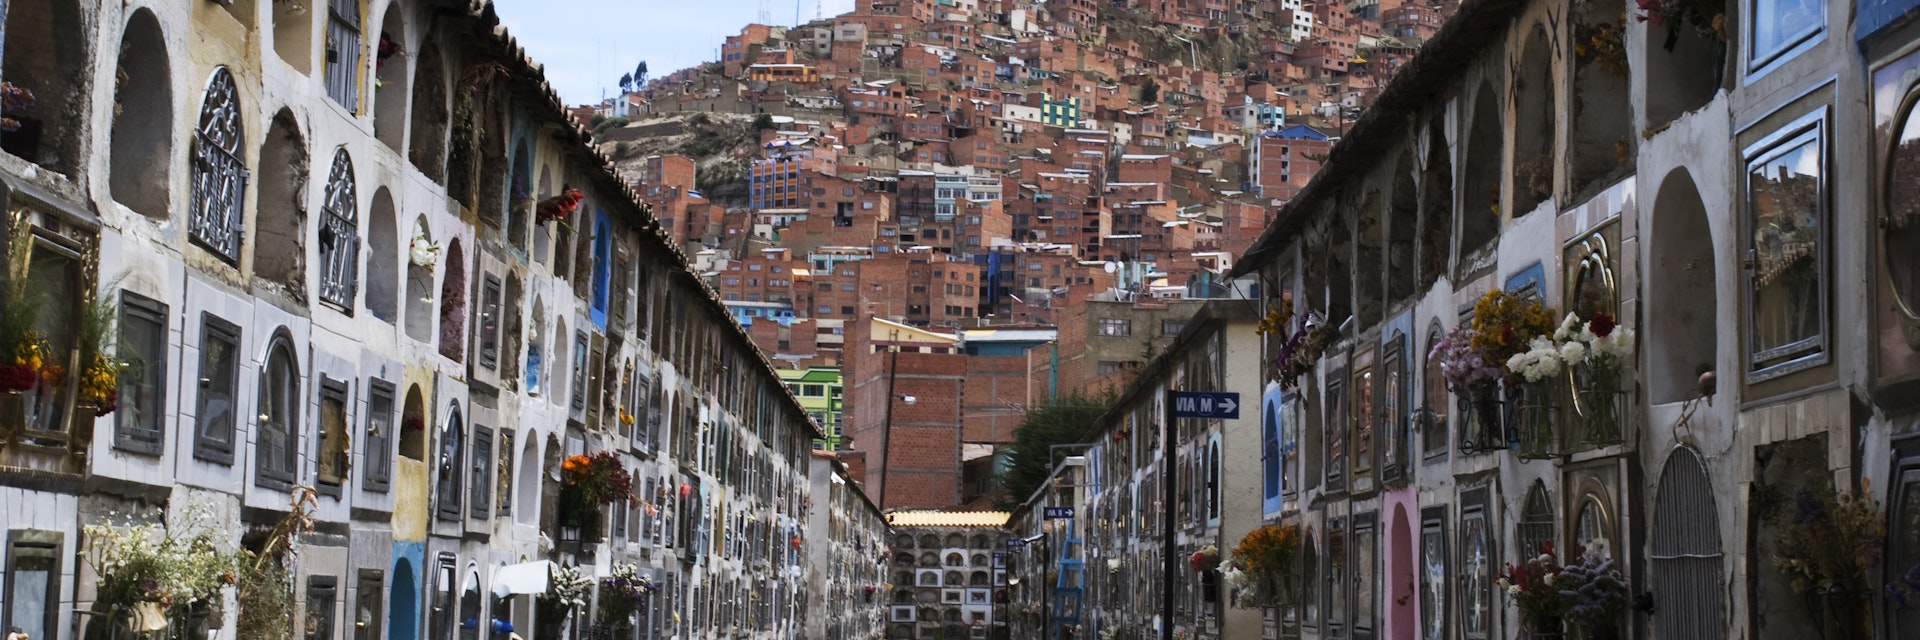 La Paz, La Paz, Bolivia, South America